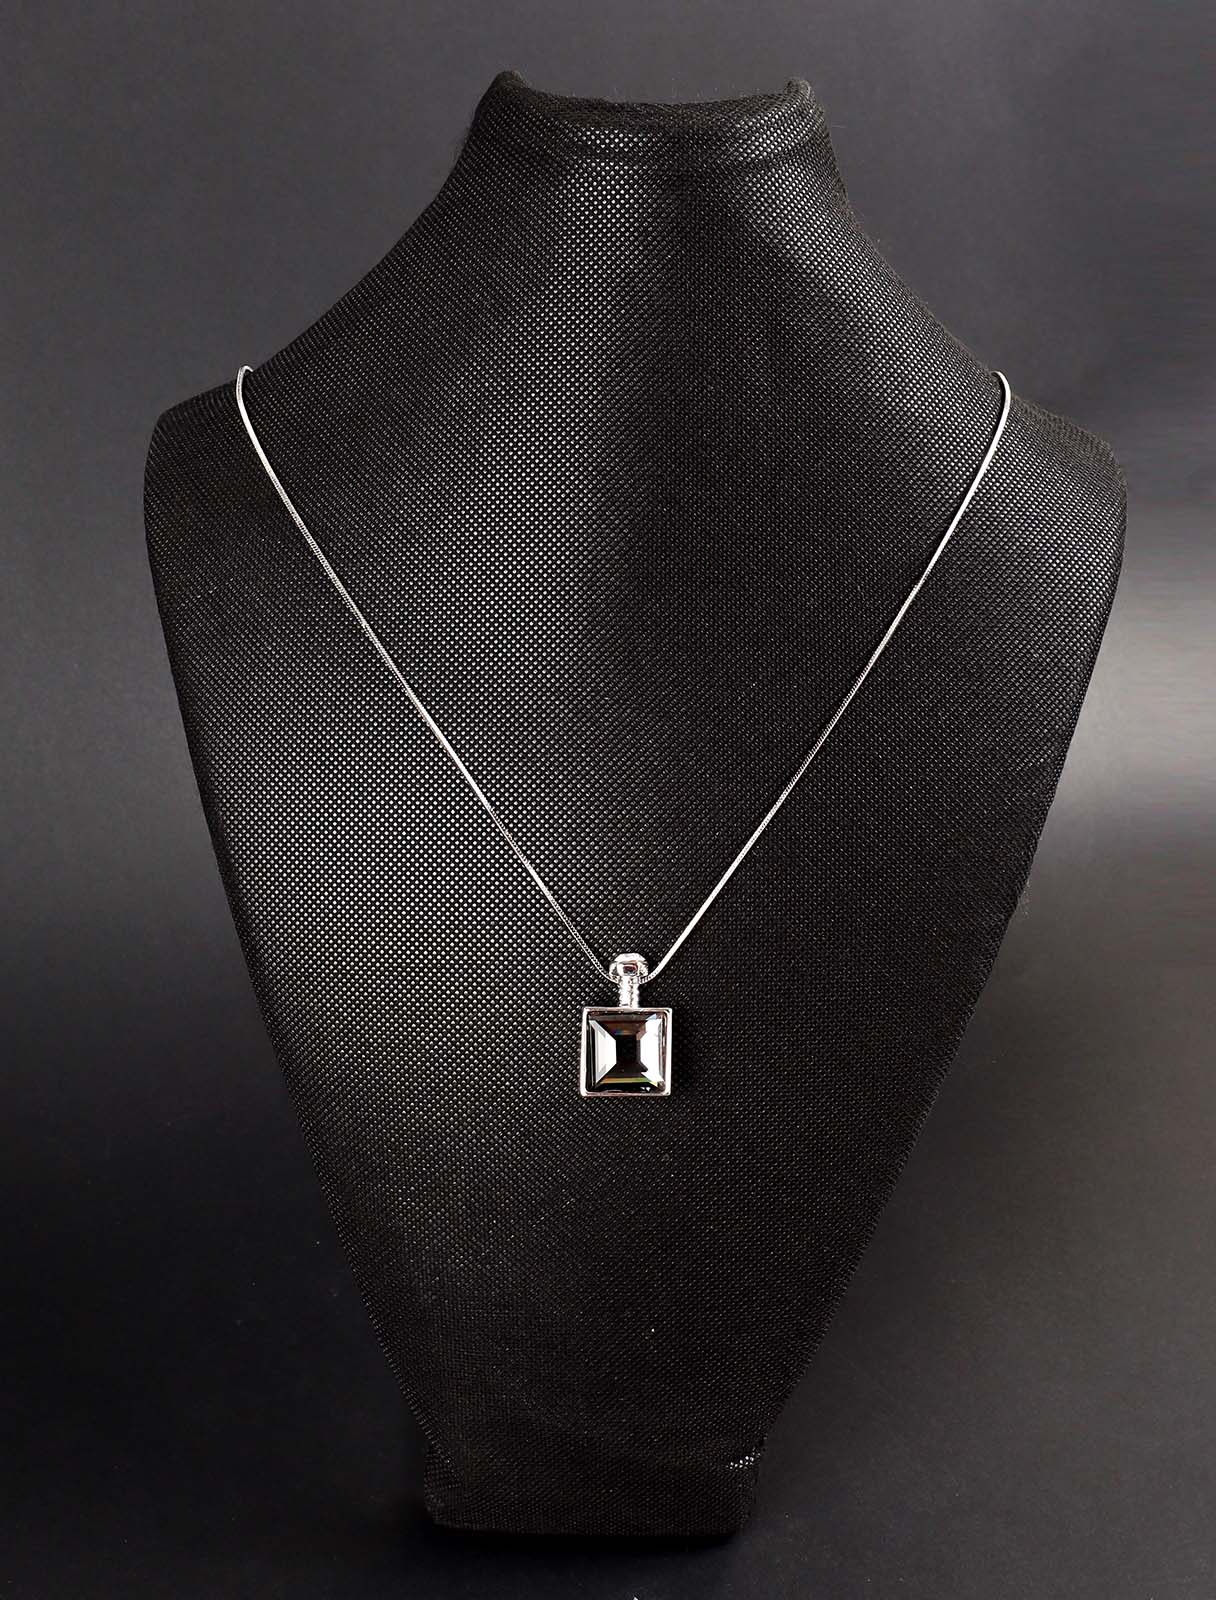 Perfume bottle pendant necklace with black transparent stone